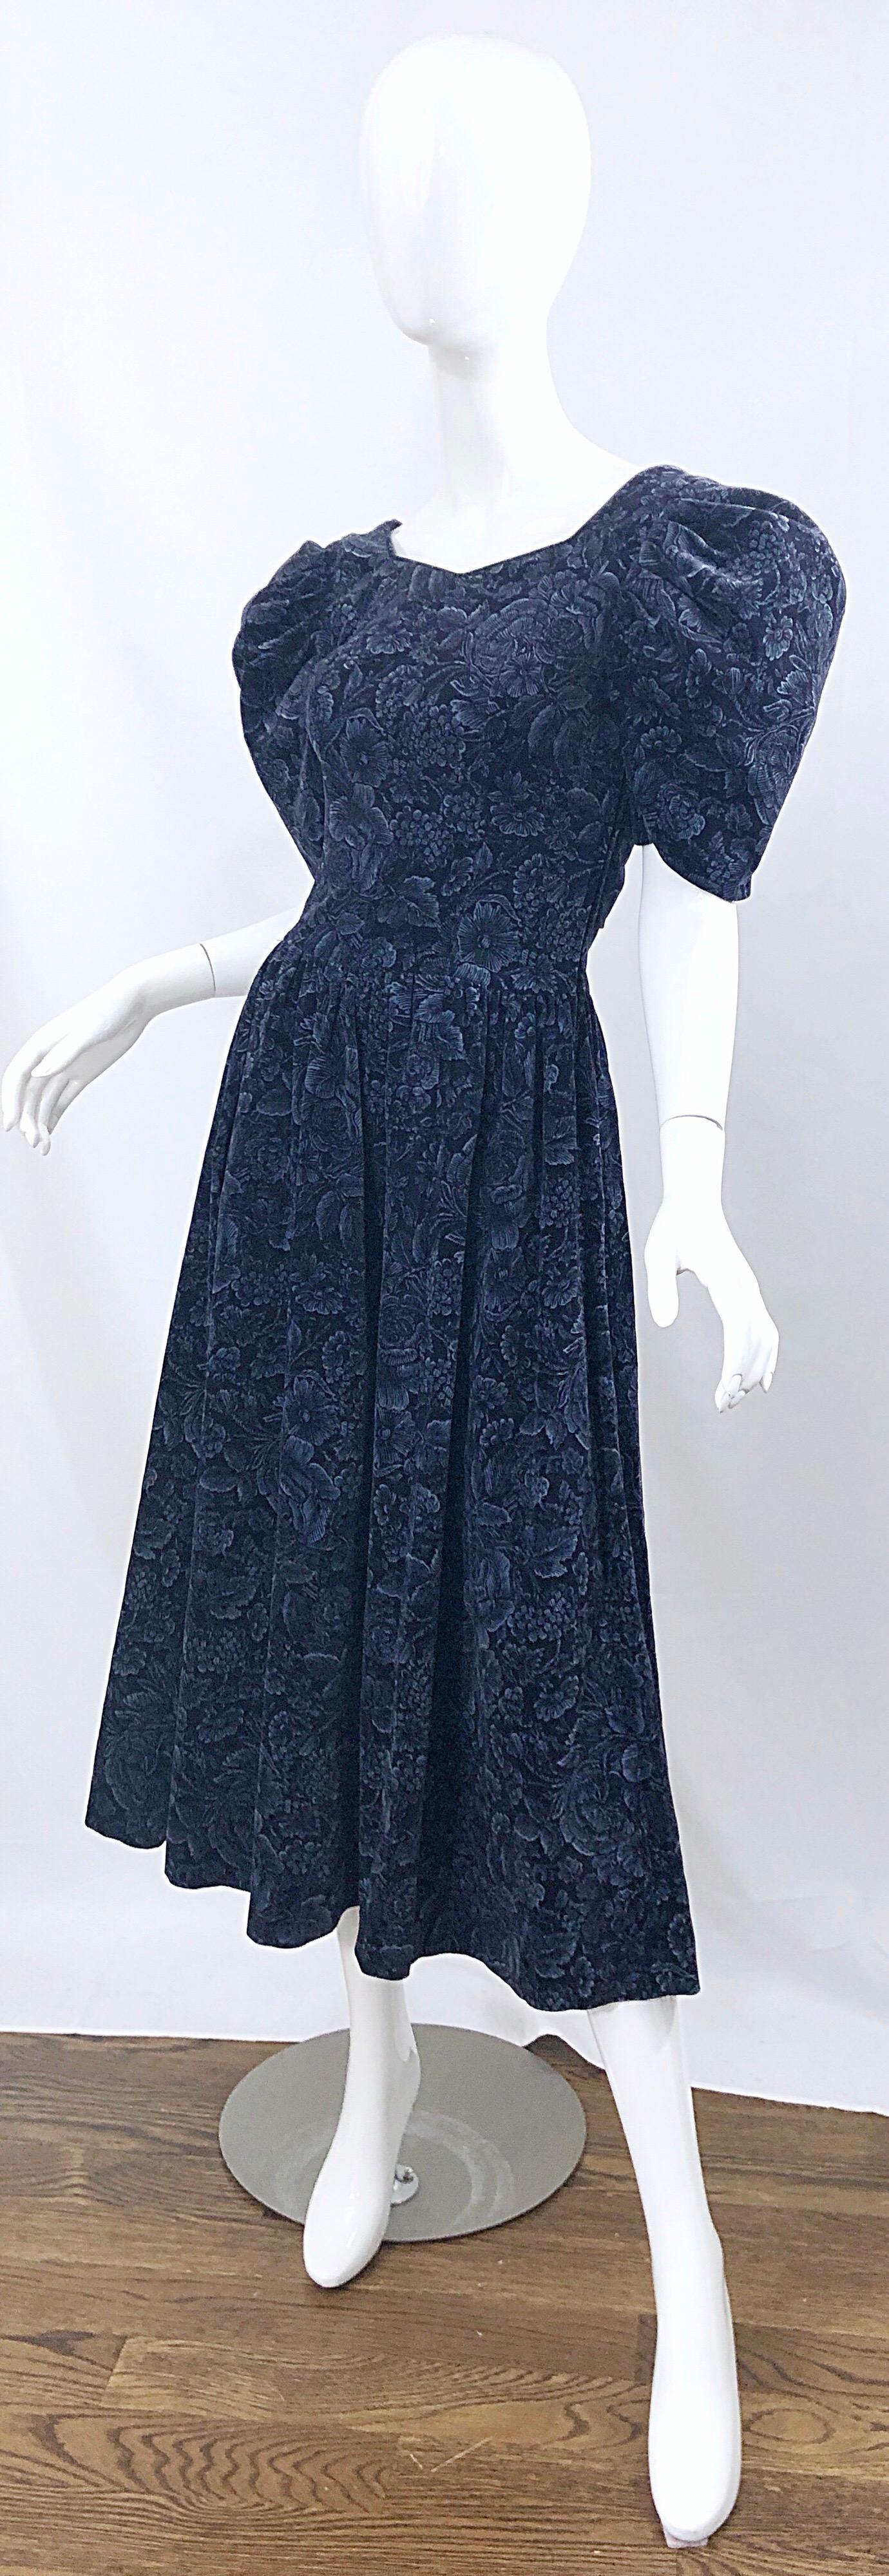 laura ashley dresses 1980s